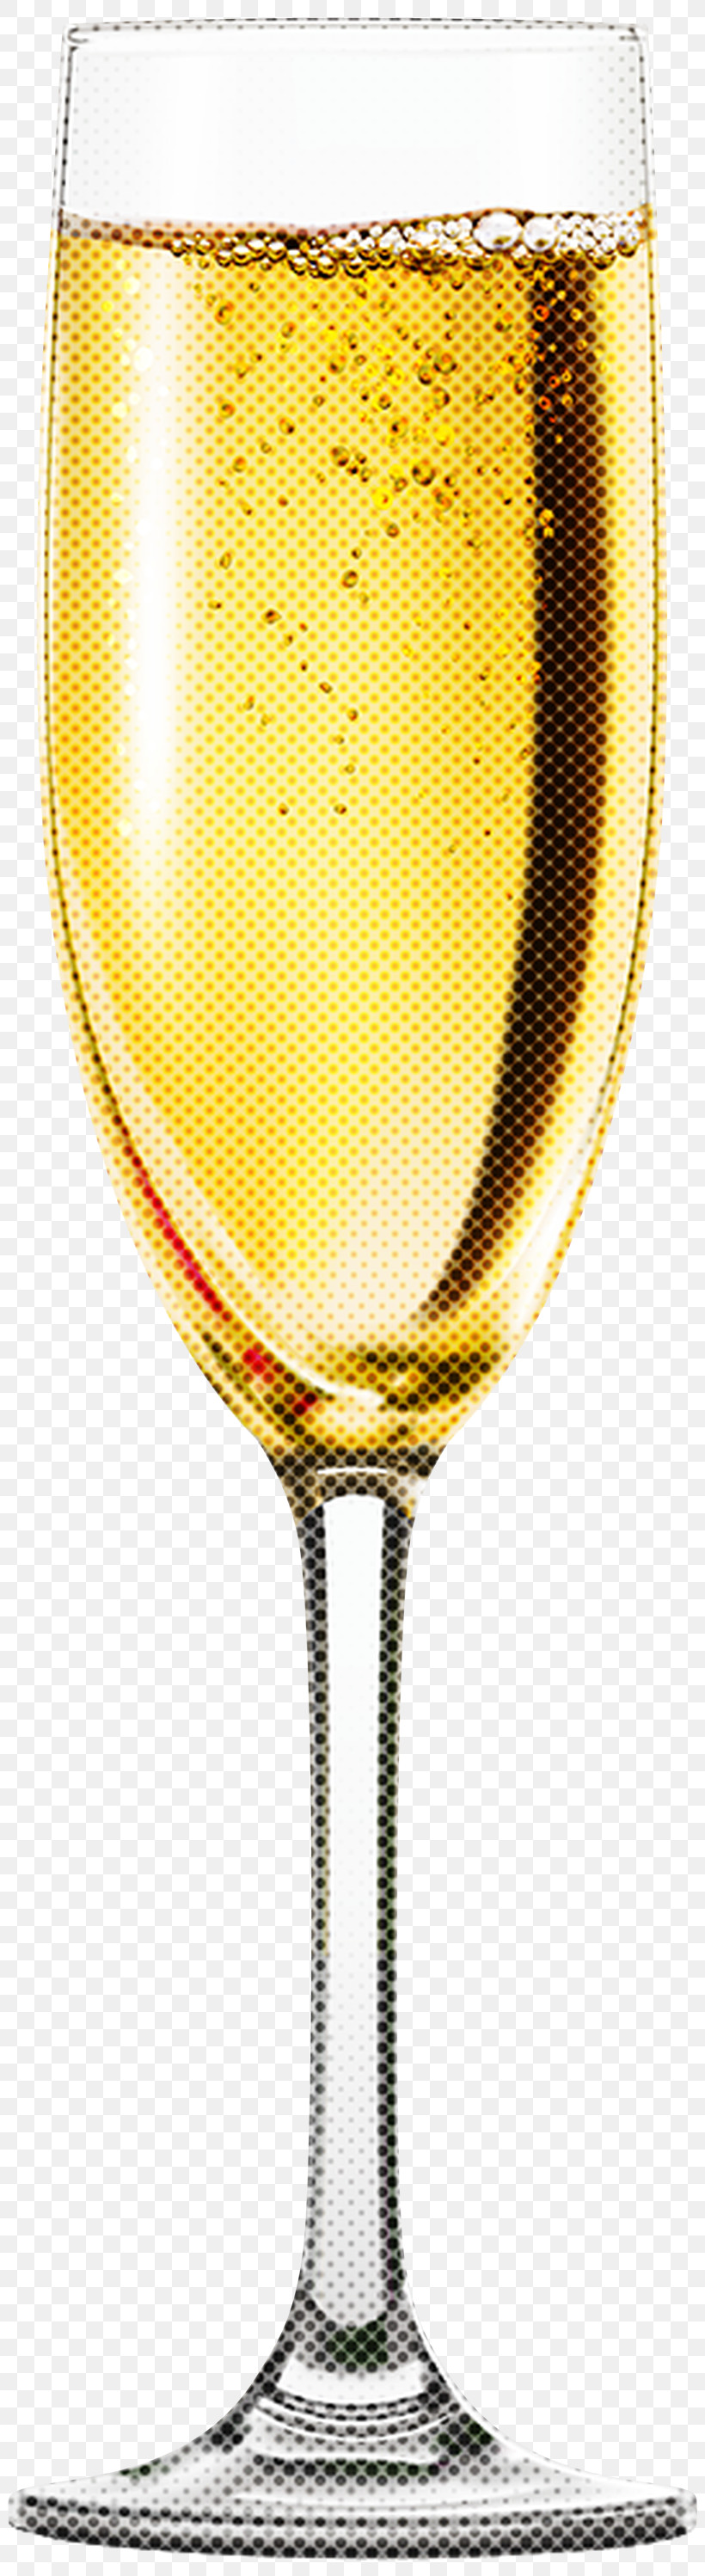 Champagne Stemware Drinkware Stemware Glass Yellow, PNG, 812x2996px, Champagne Stemware, Champagne Cocktail, Drink, Drinkware, Glass Download Free